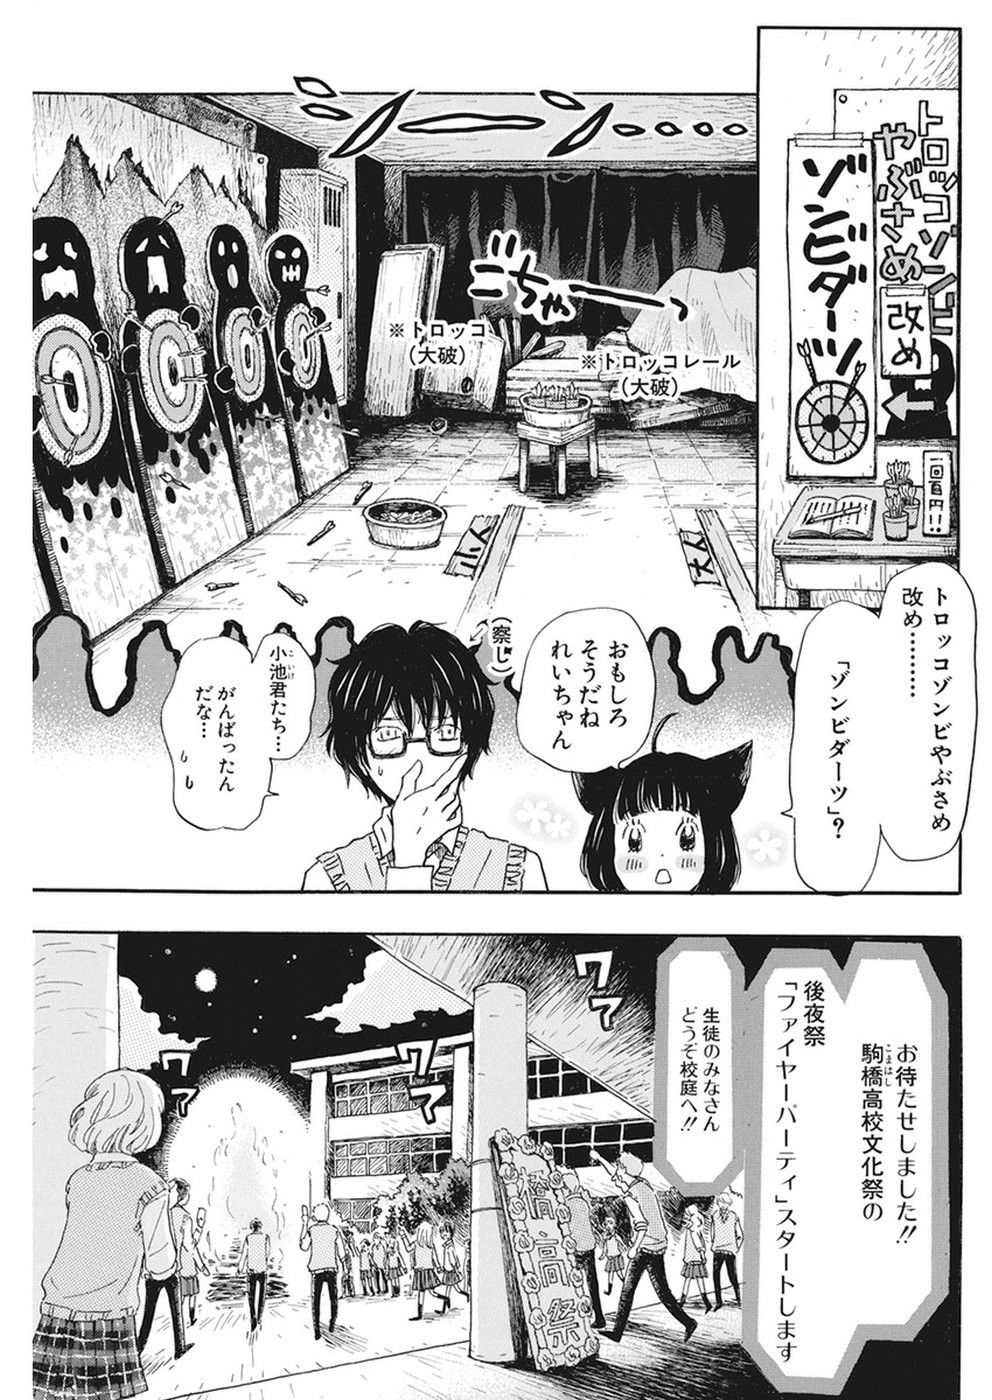 3 Gatsu no Lion - Chapter 154 - Page 4